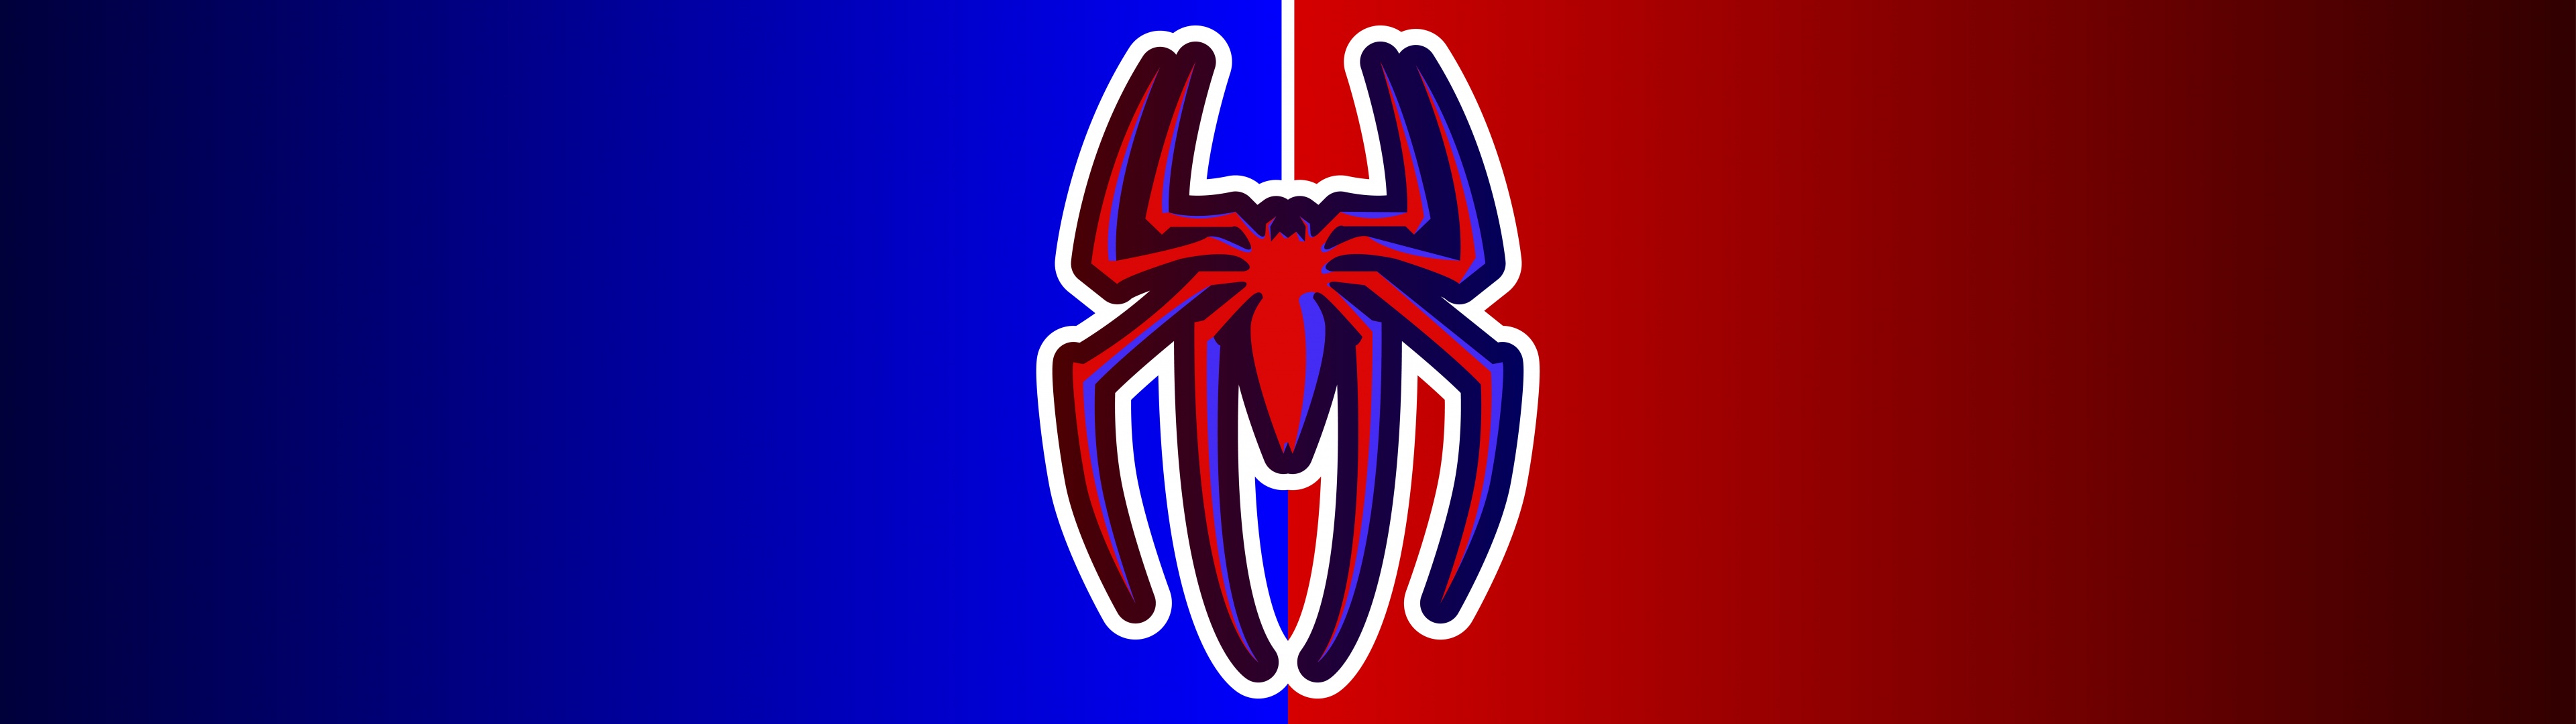 Minimalist Spiderman Desktop Wallpaper 4K